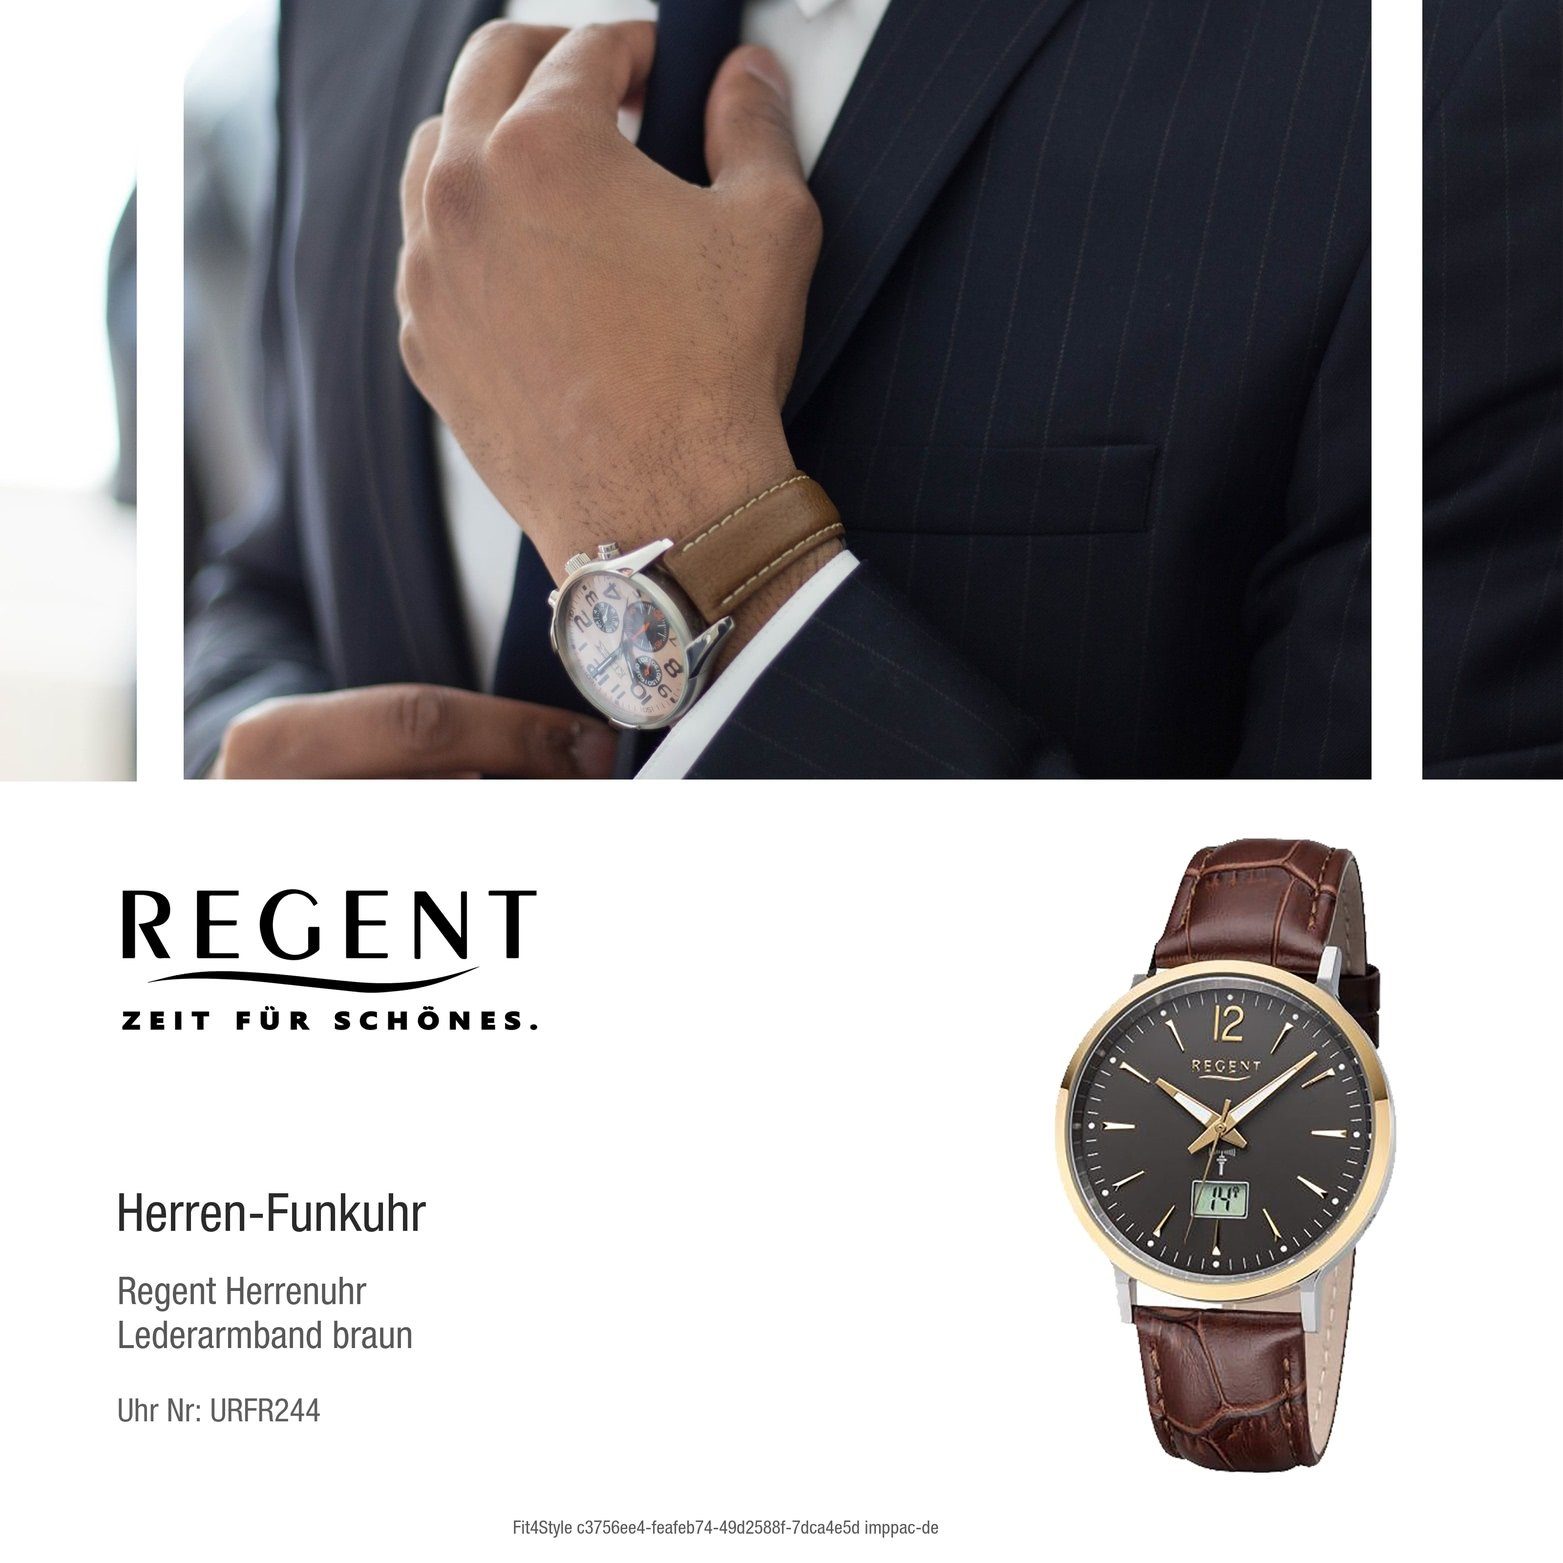 Uhr Funkuhr Gehäuse Regent Herren 40mm), Lederarmband, mit Herrenuhr Elegant-Style (ca. rundes FR-244, Leder Regent